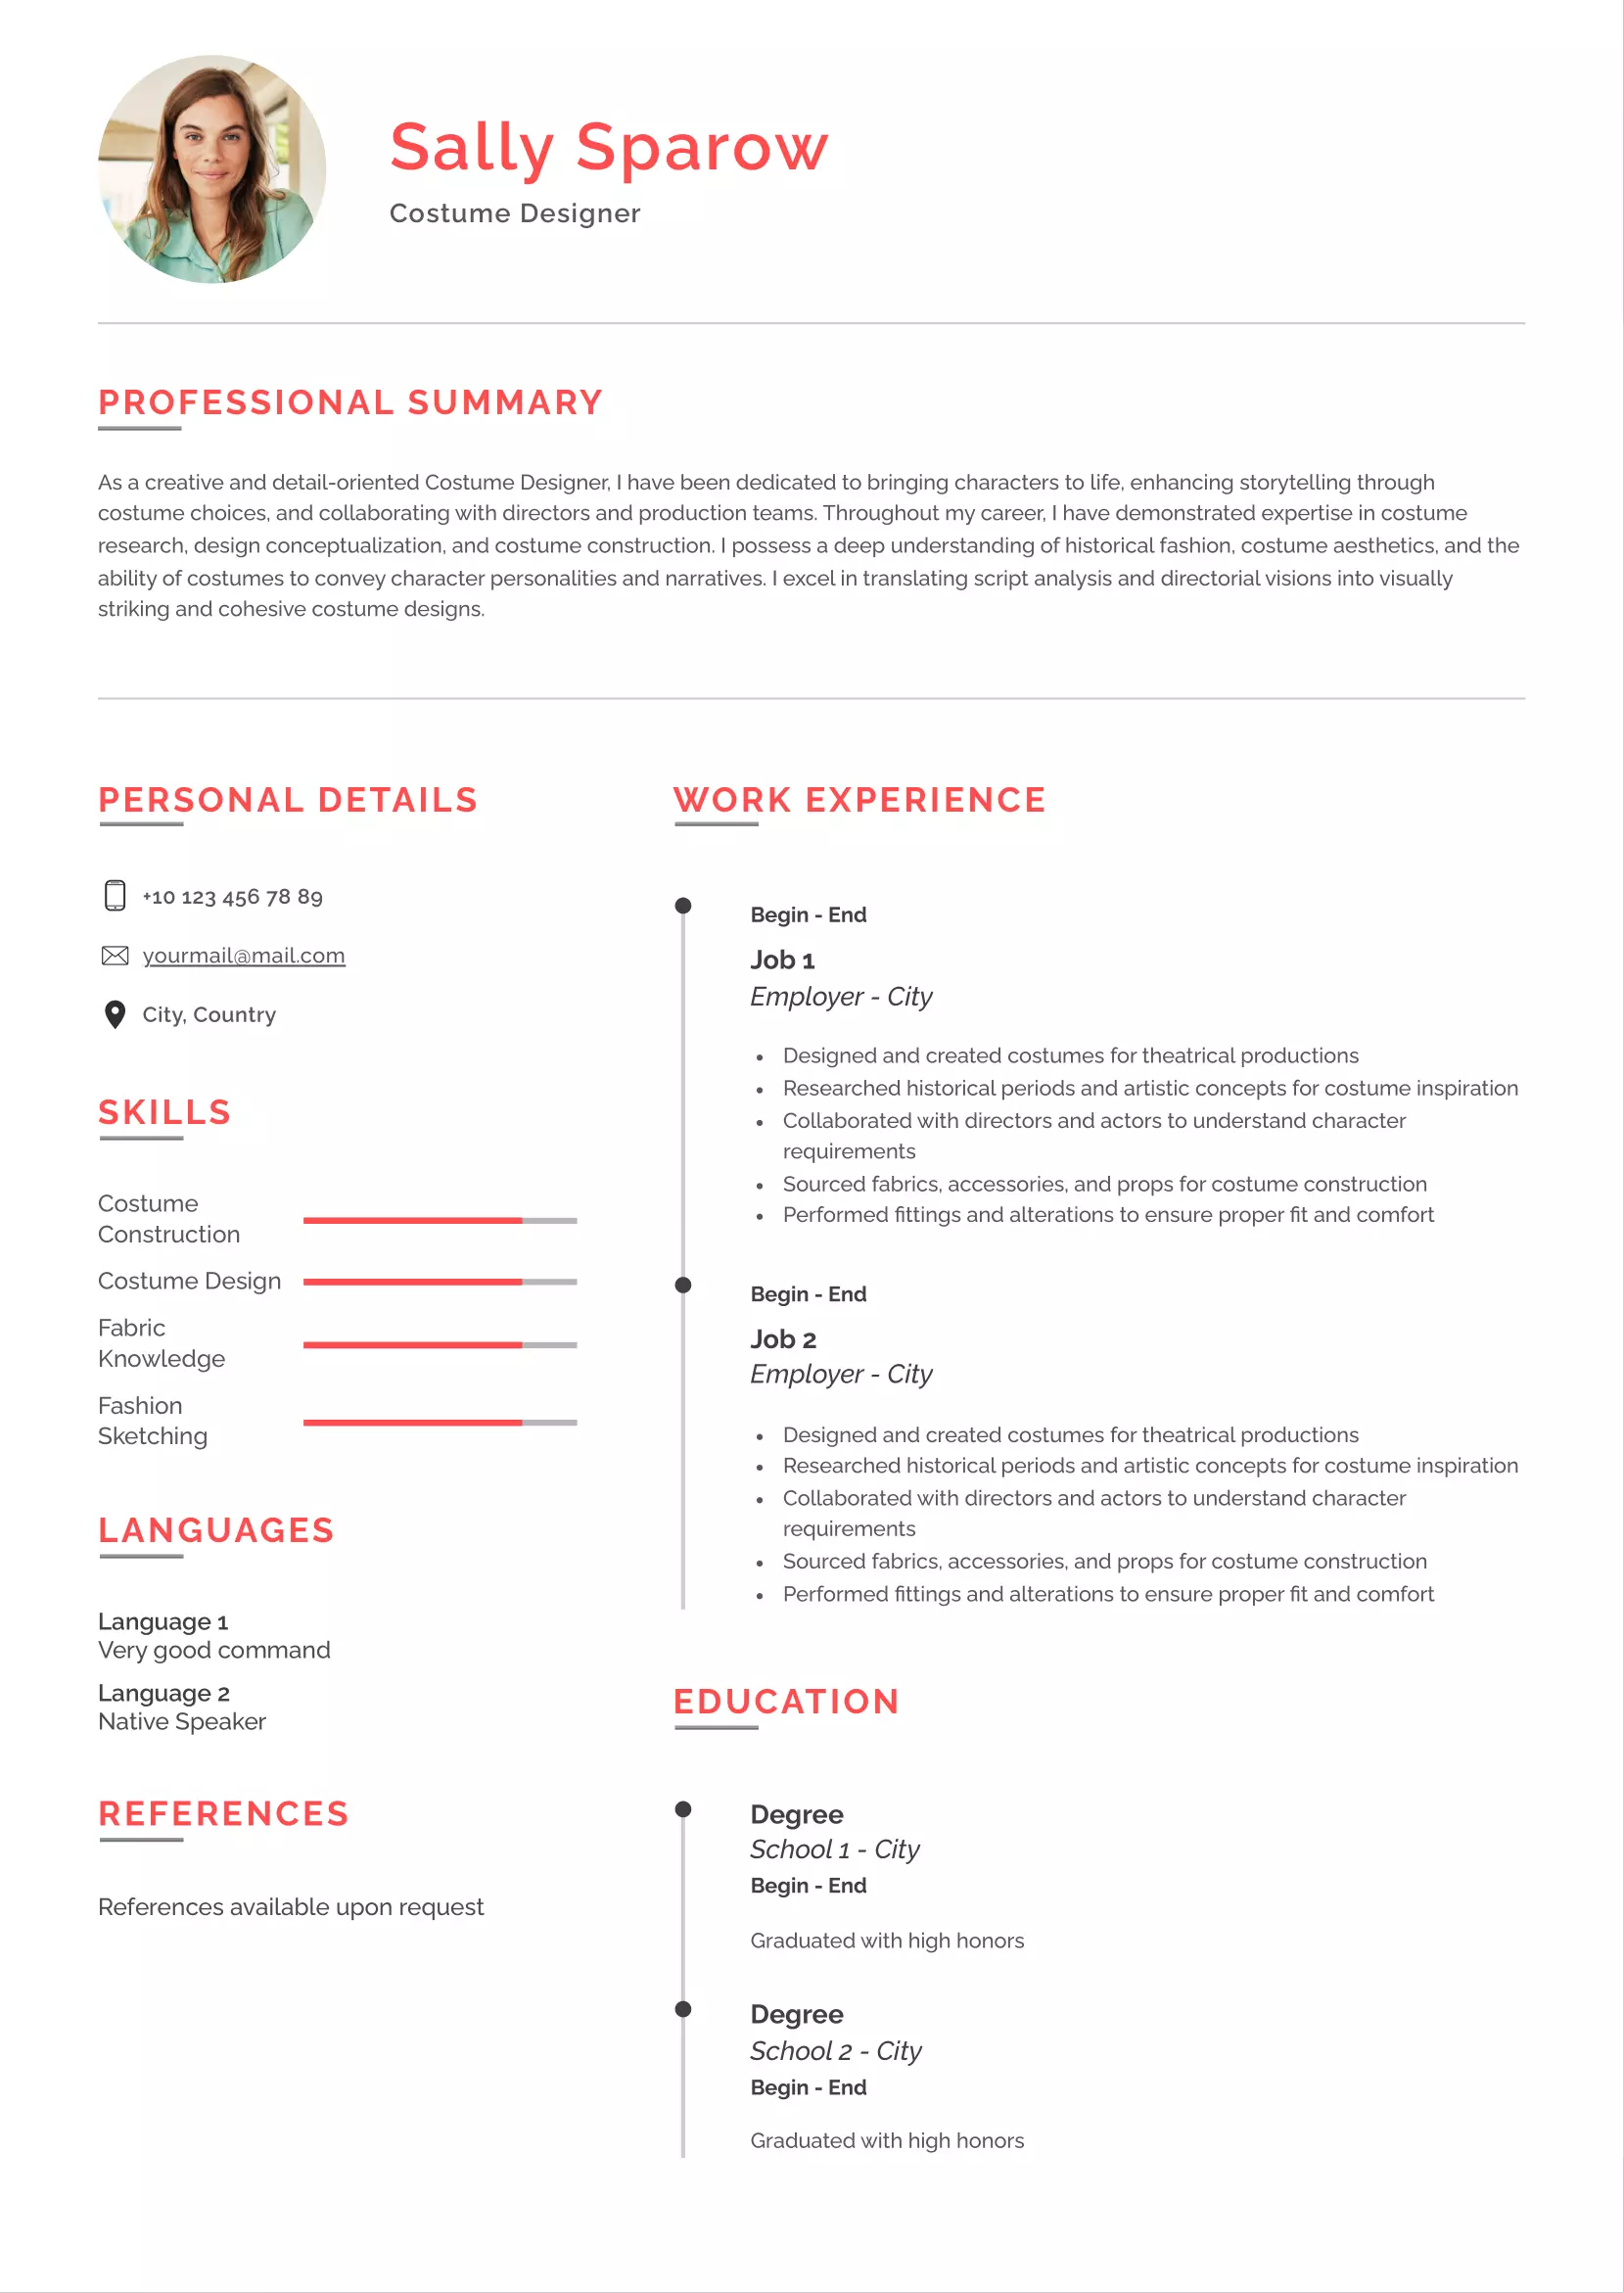 Costume designer resume CV